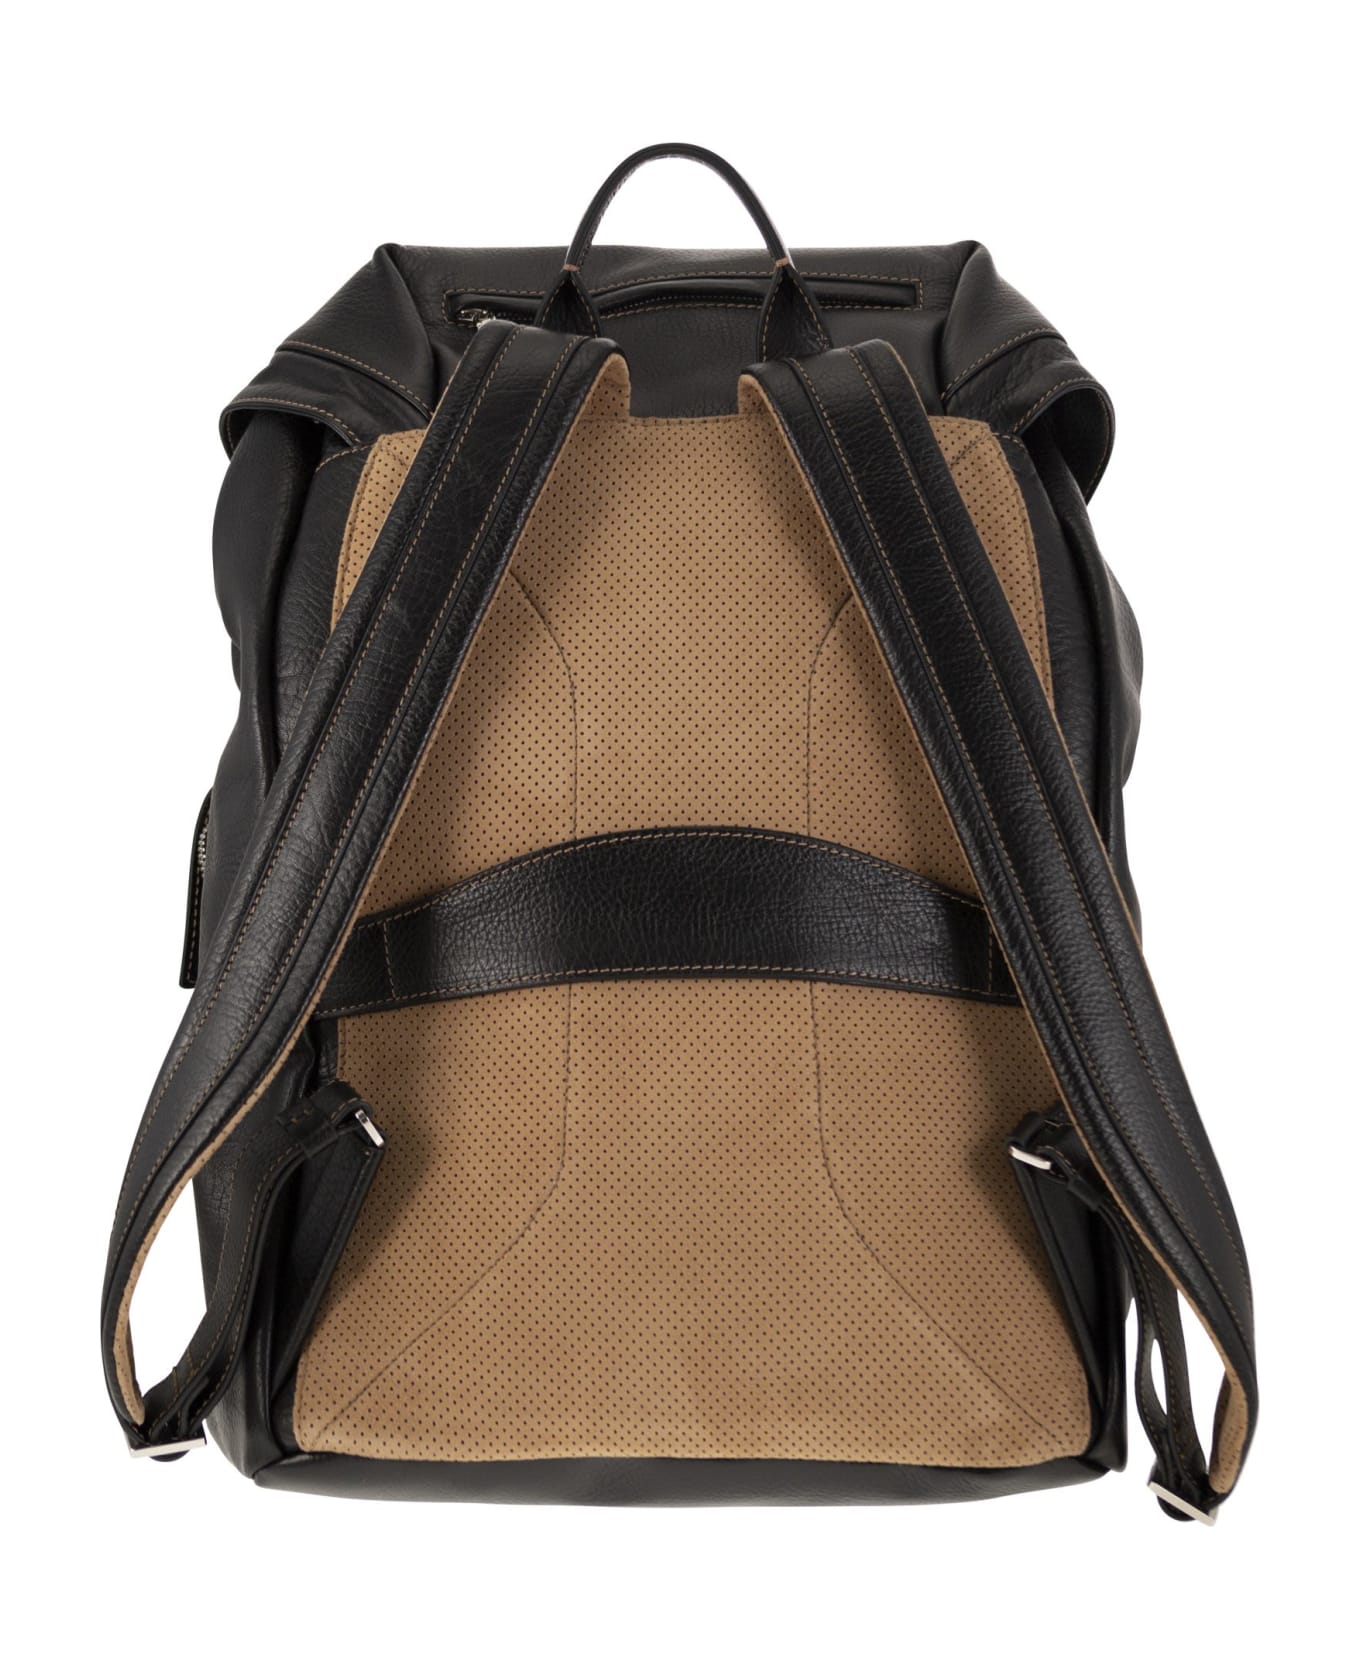 Brunello Cucinelli Leather Backpack - Black バックパック